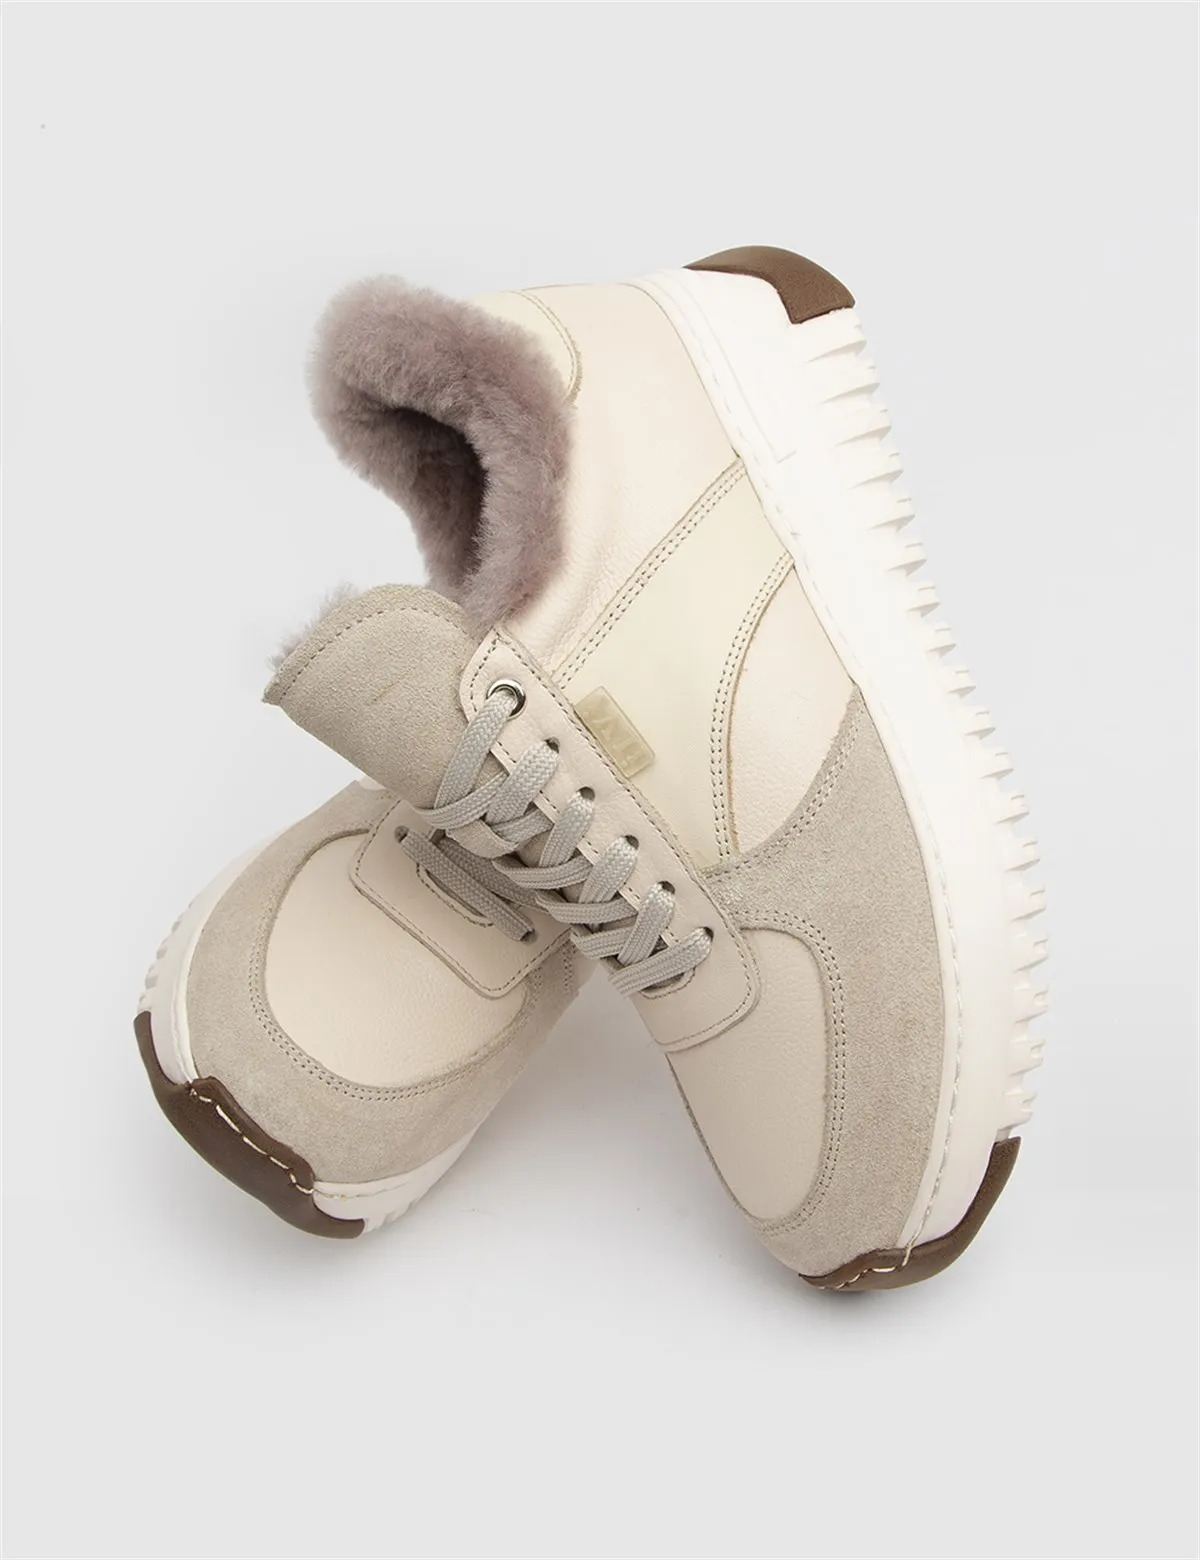 

ILVi-Genuine Leather Handmade Berd Grey Suede-Cream Sneaker Women's Shoes 2022 Fall/Winter